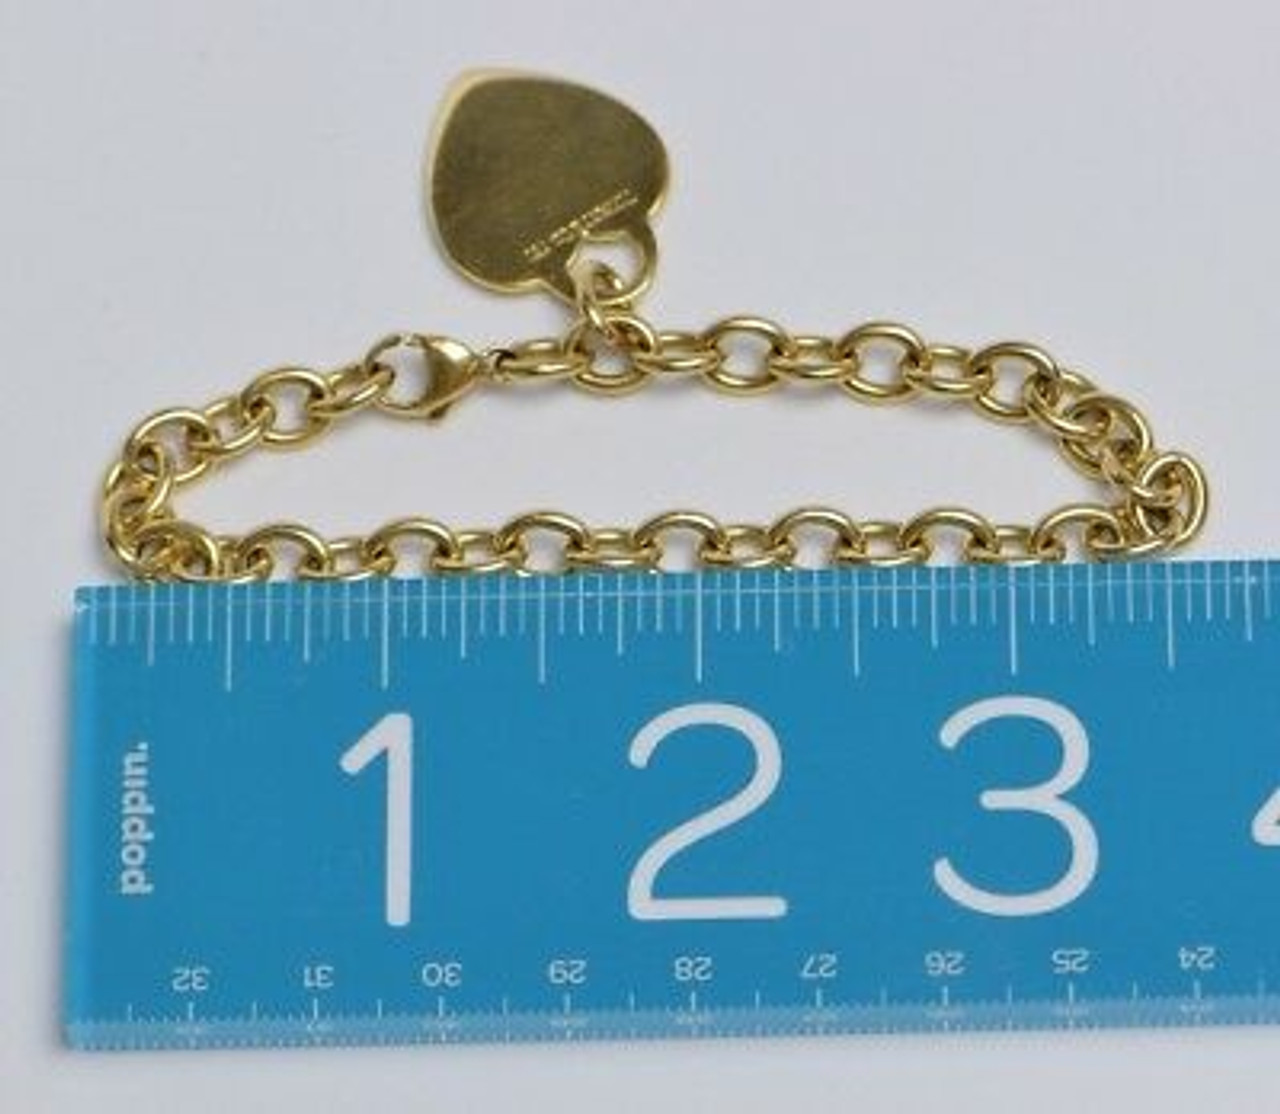 Tiffany & Co. Charm Bracelet in 18K Yellow Gold